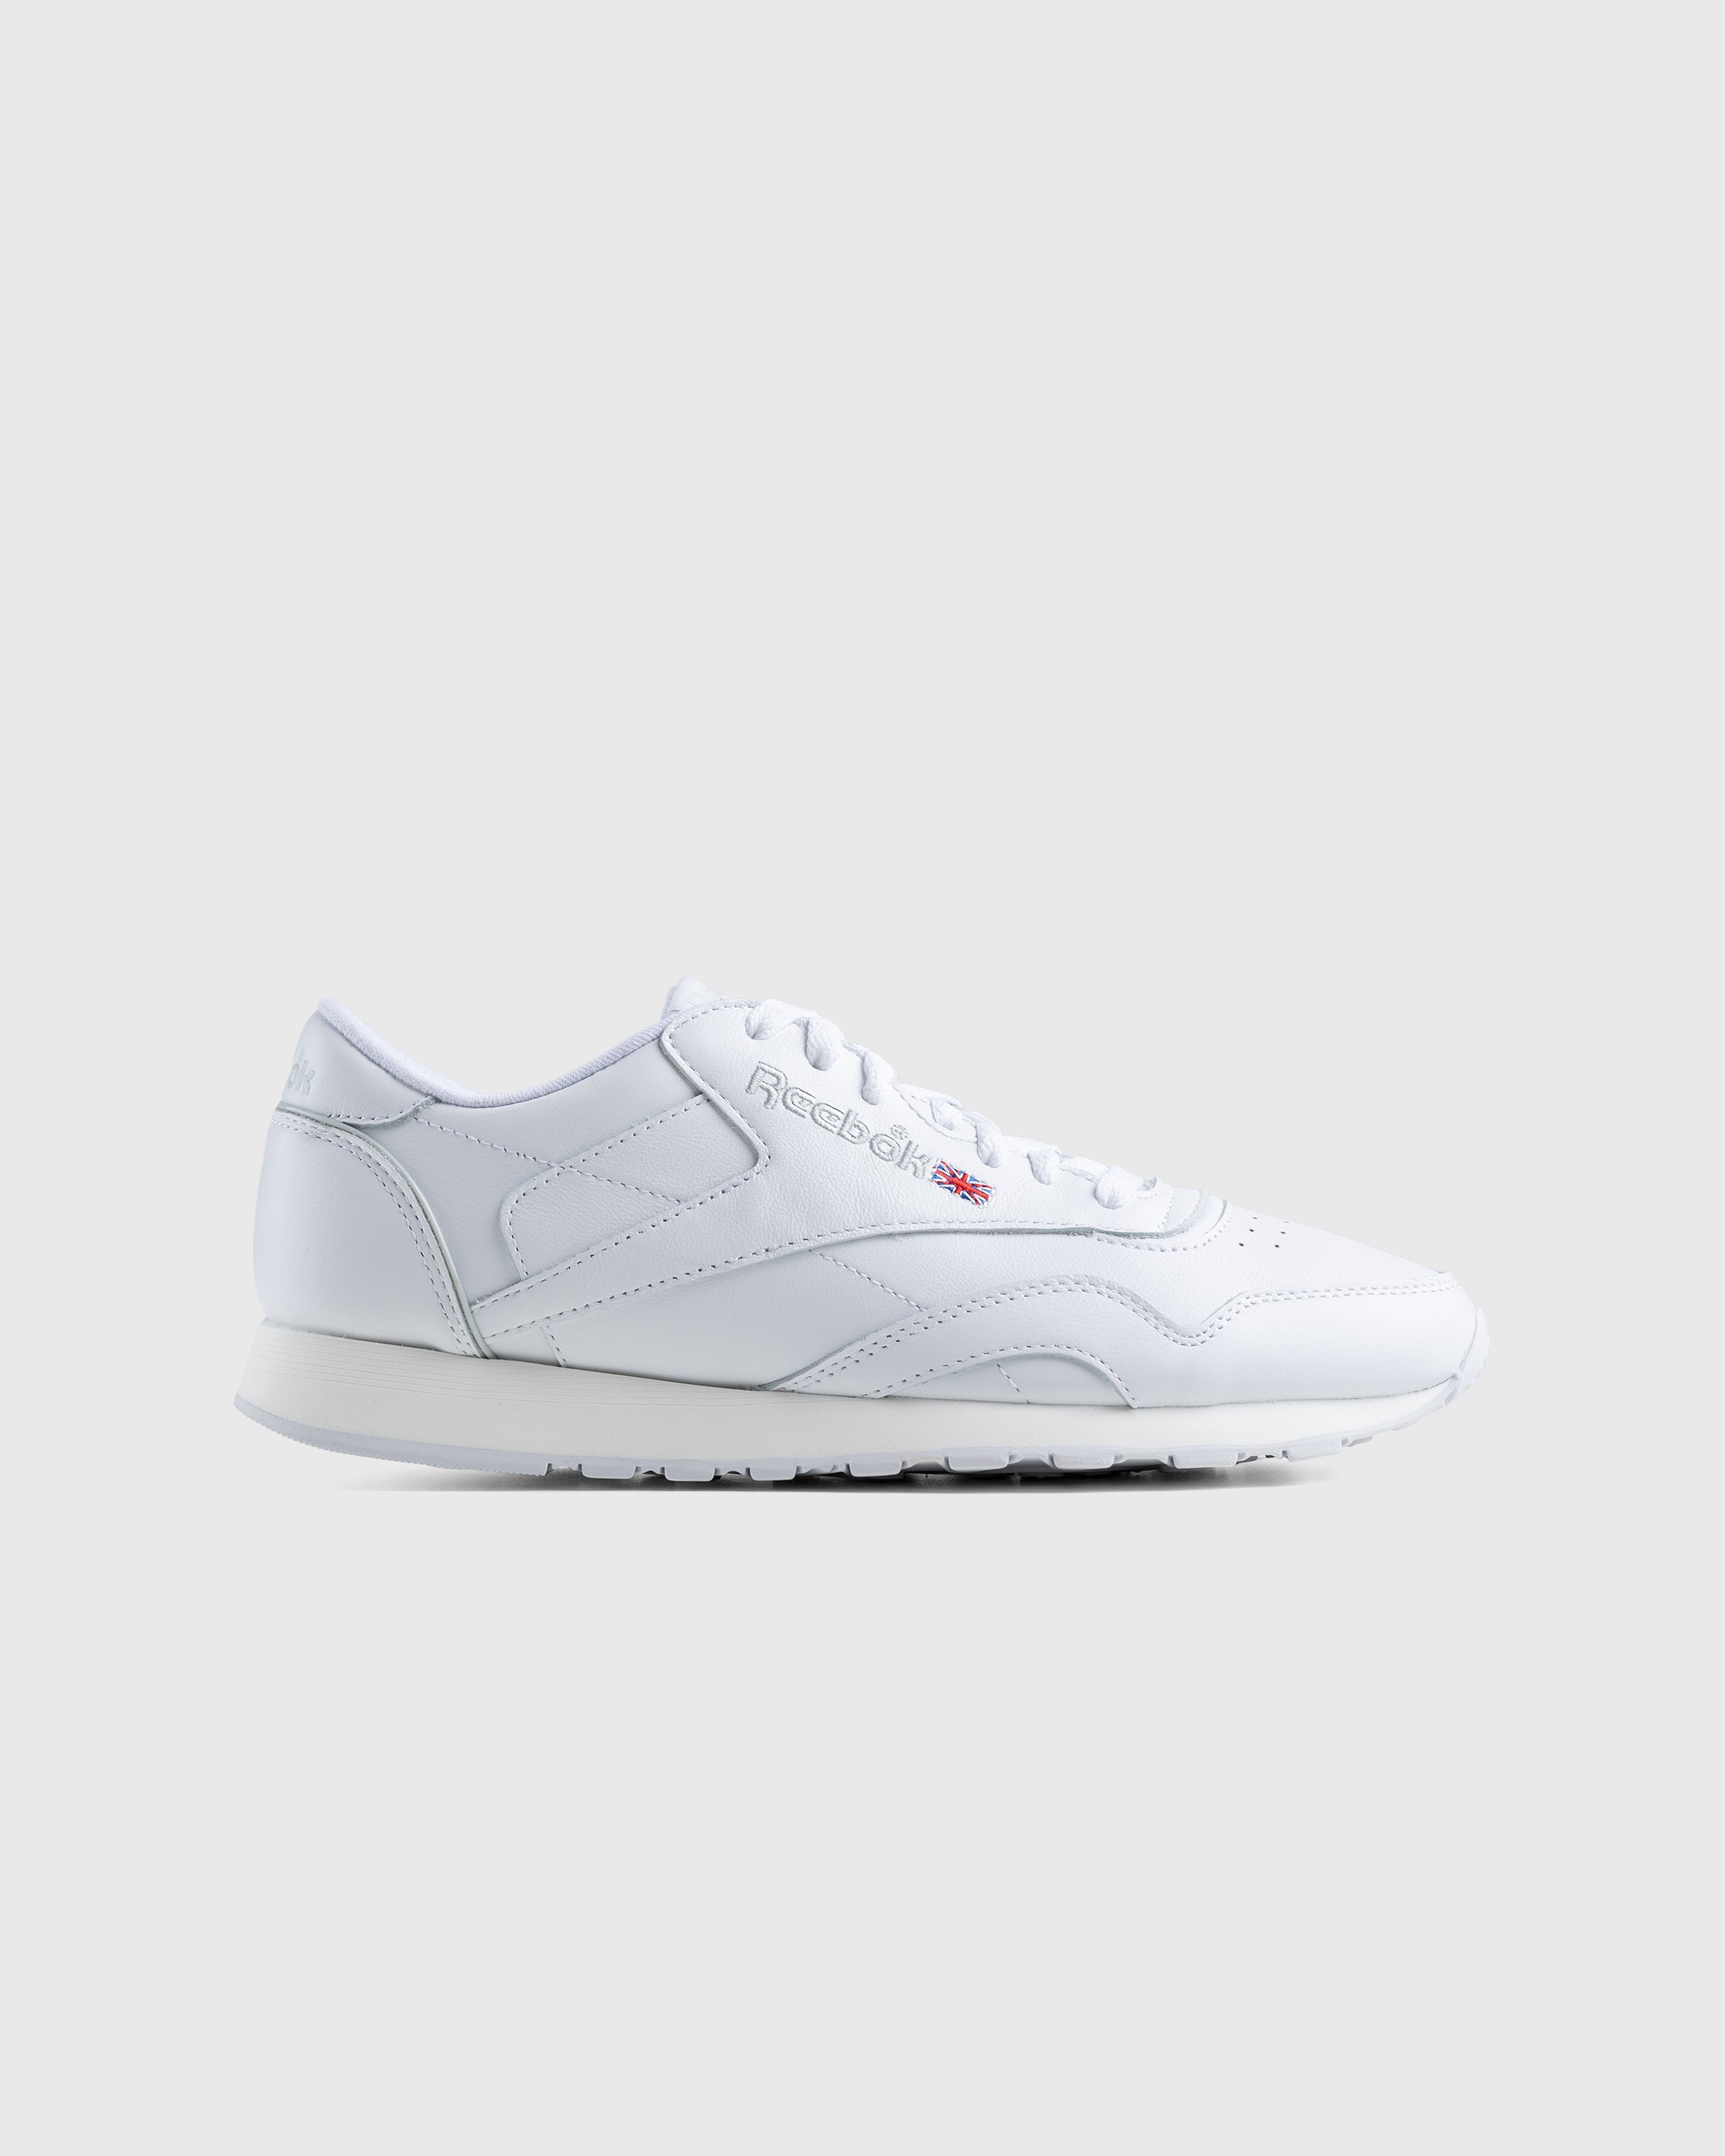 Reebok - Classic Leather Plus White - Footwear - White - Image 1